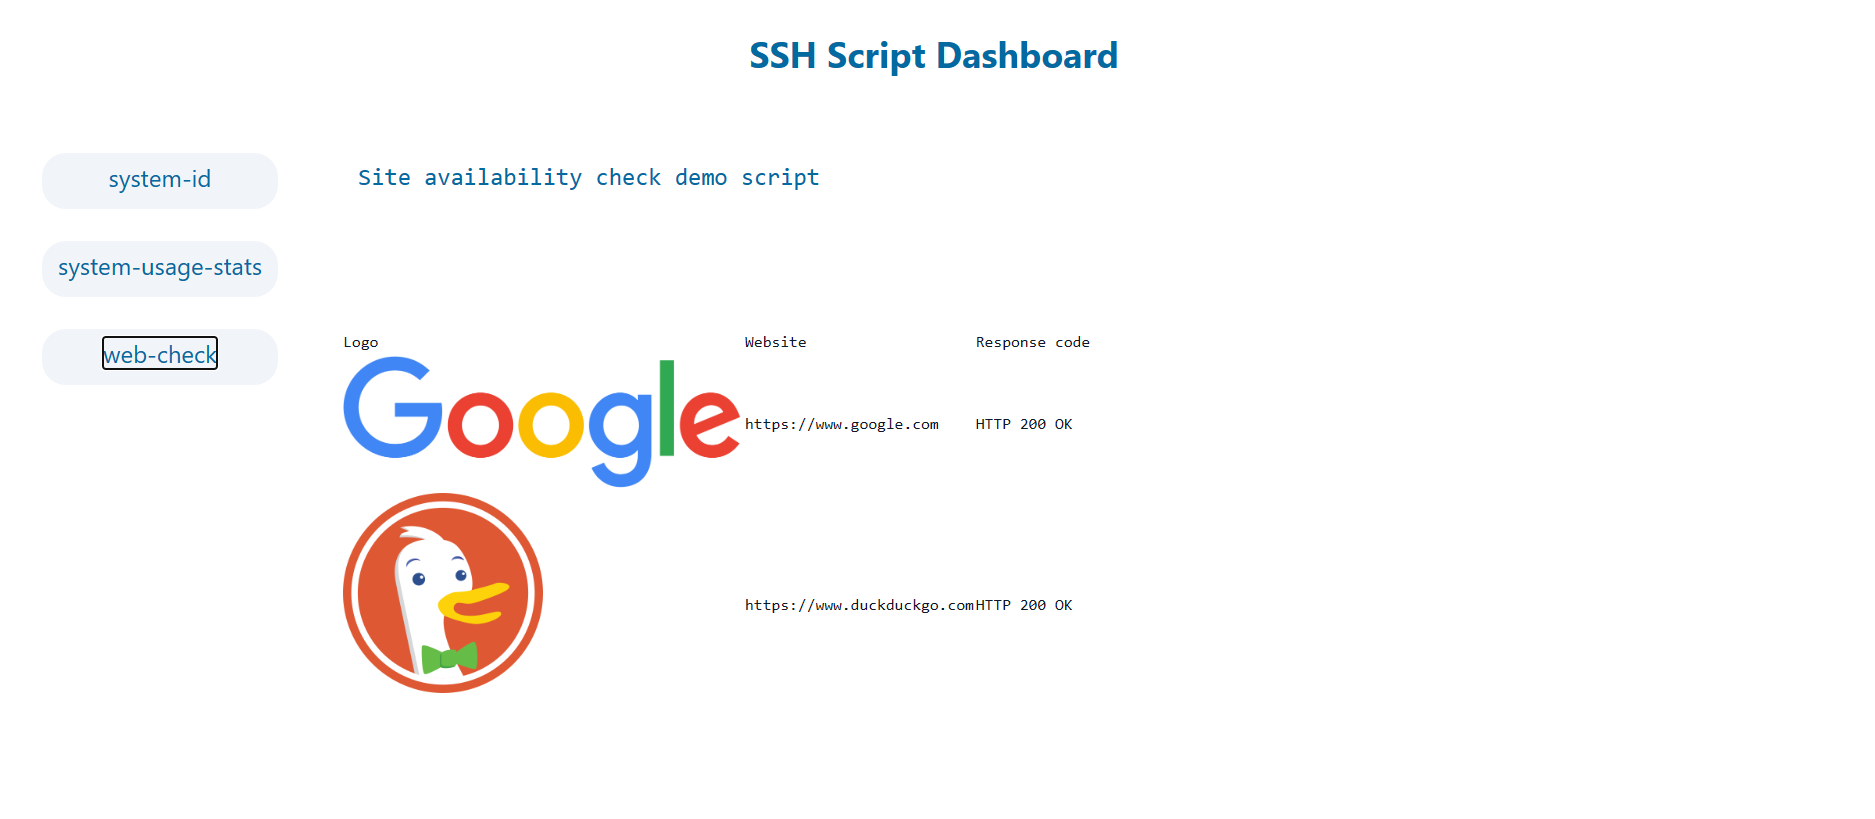 ssh script dashboard